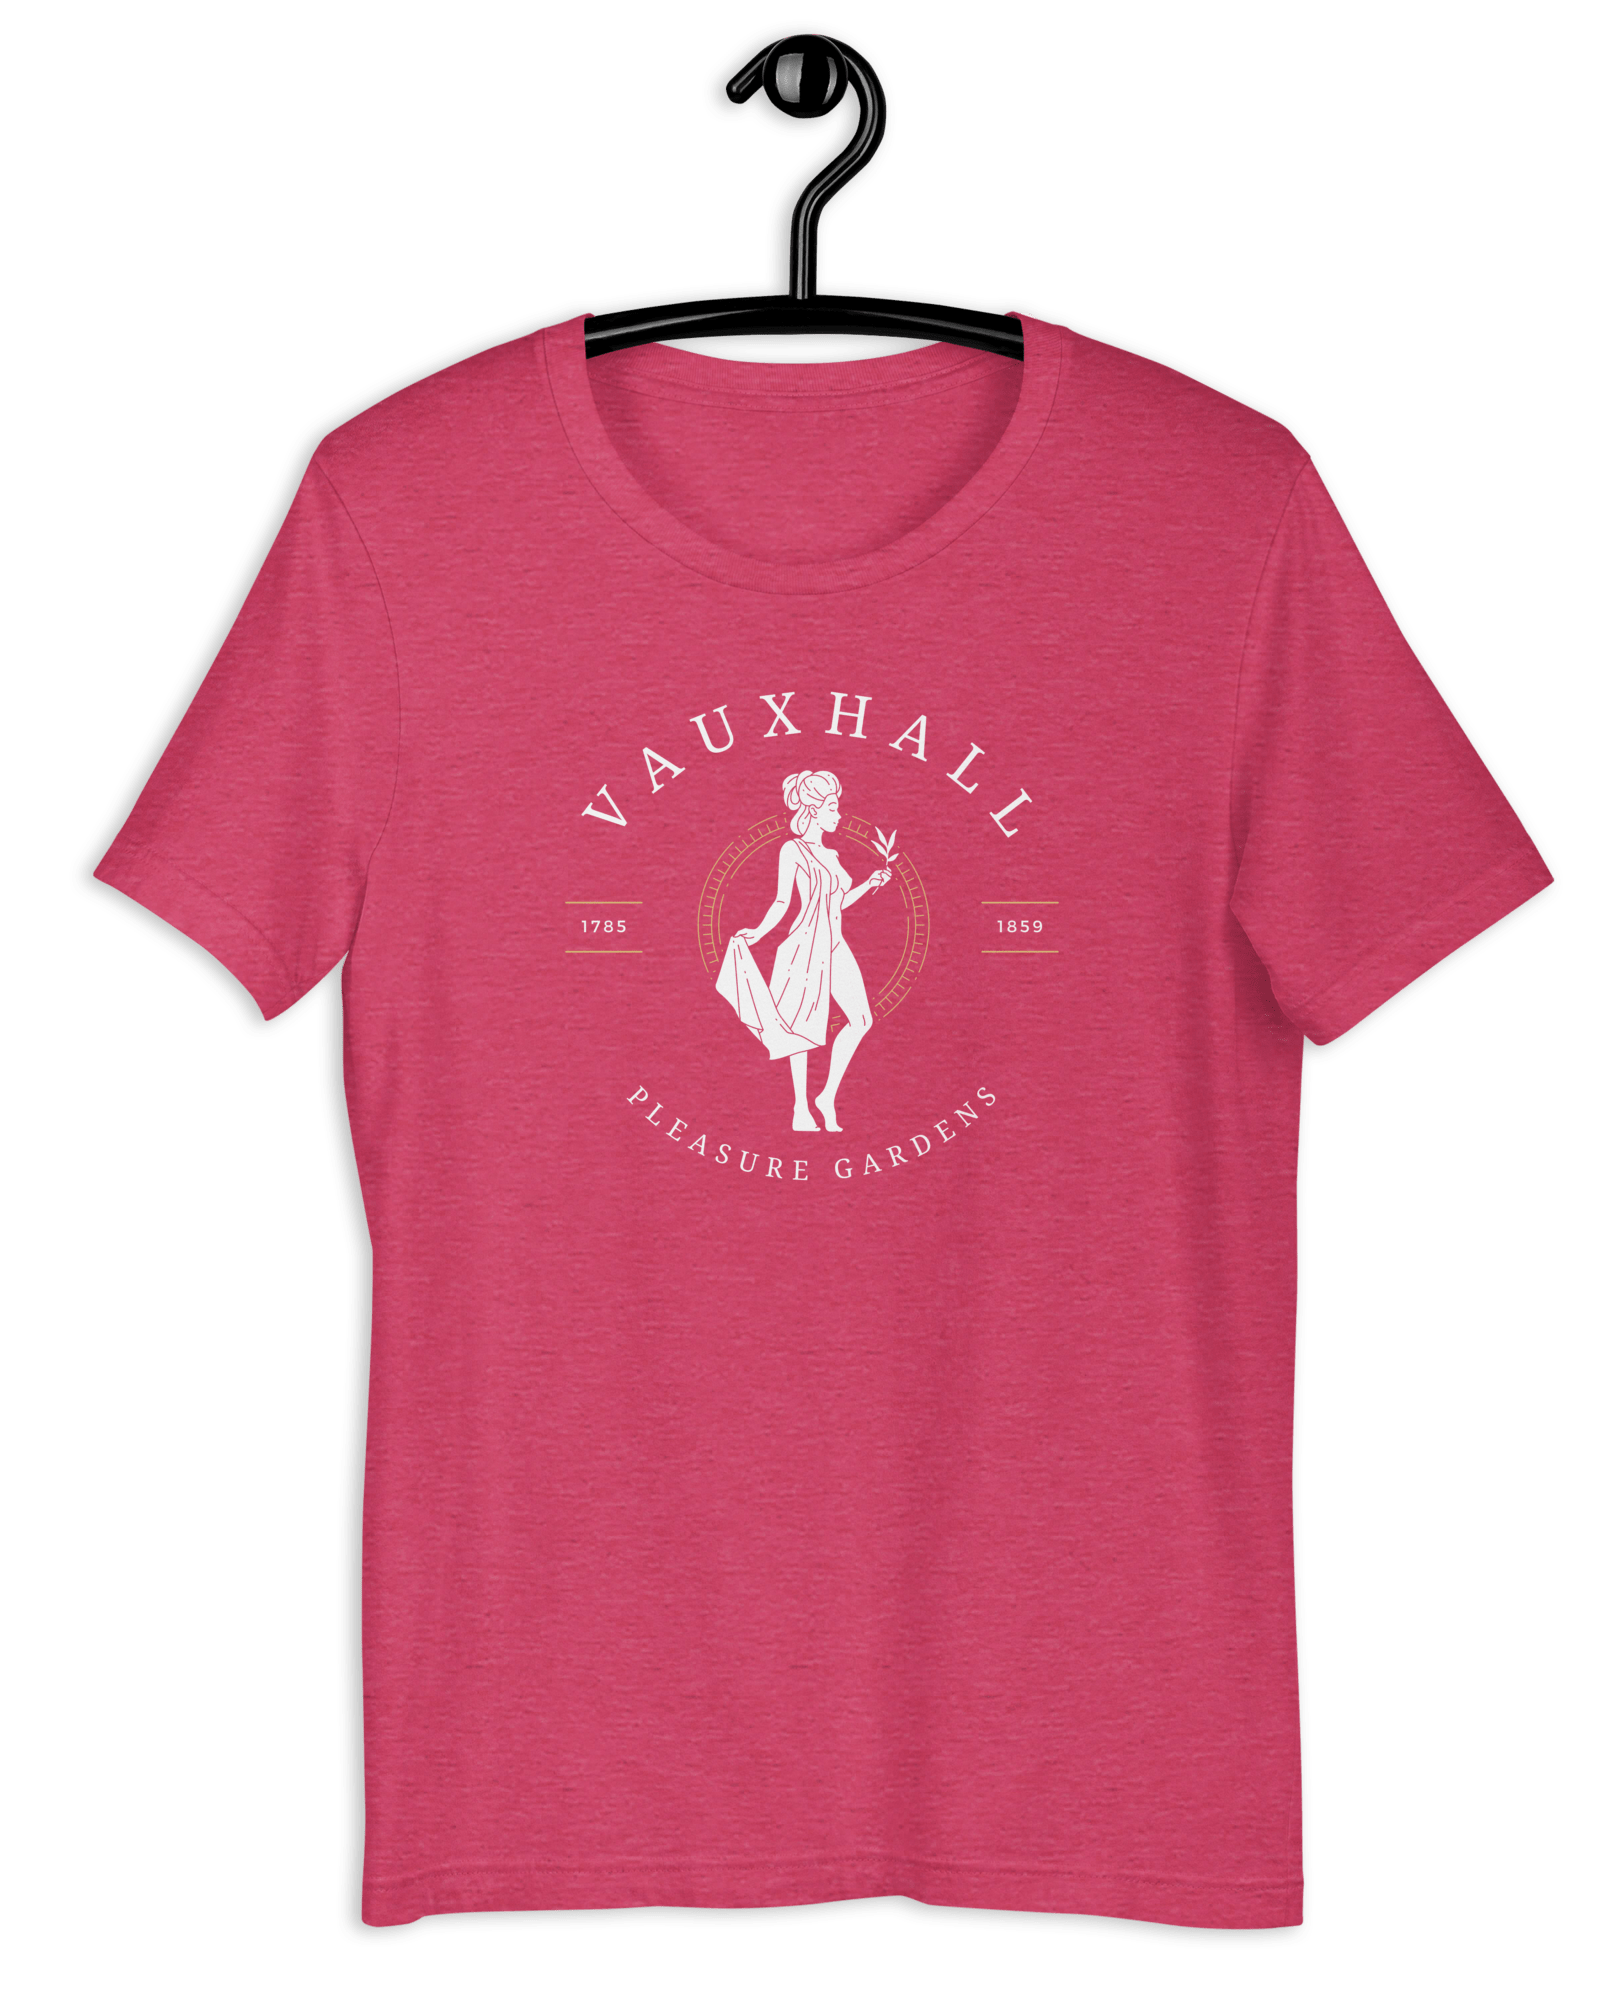 Vauxhall Pleasure Gardens T-shirt | Unisex Heather Raspberry / S Shirts & Tops Jolly & Goode